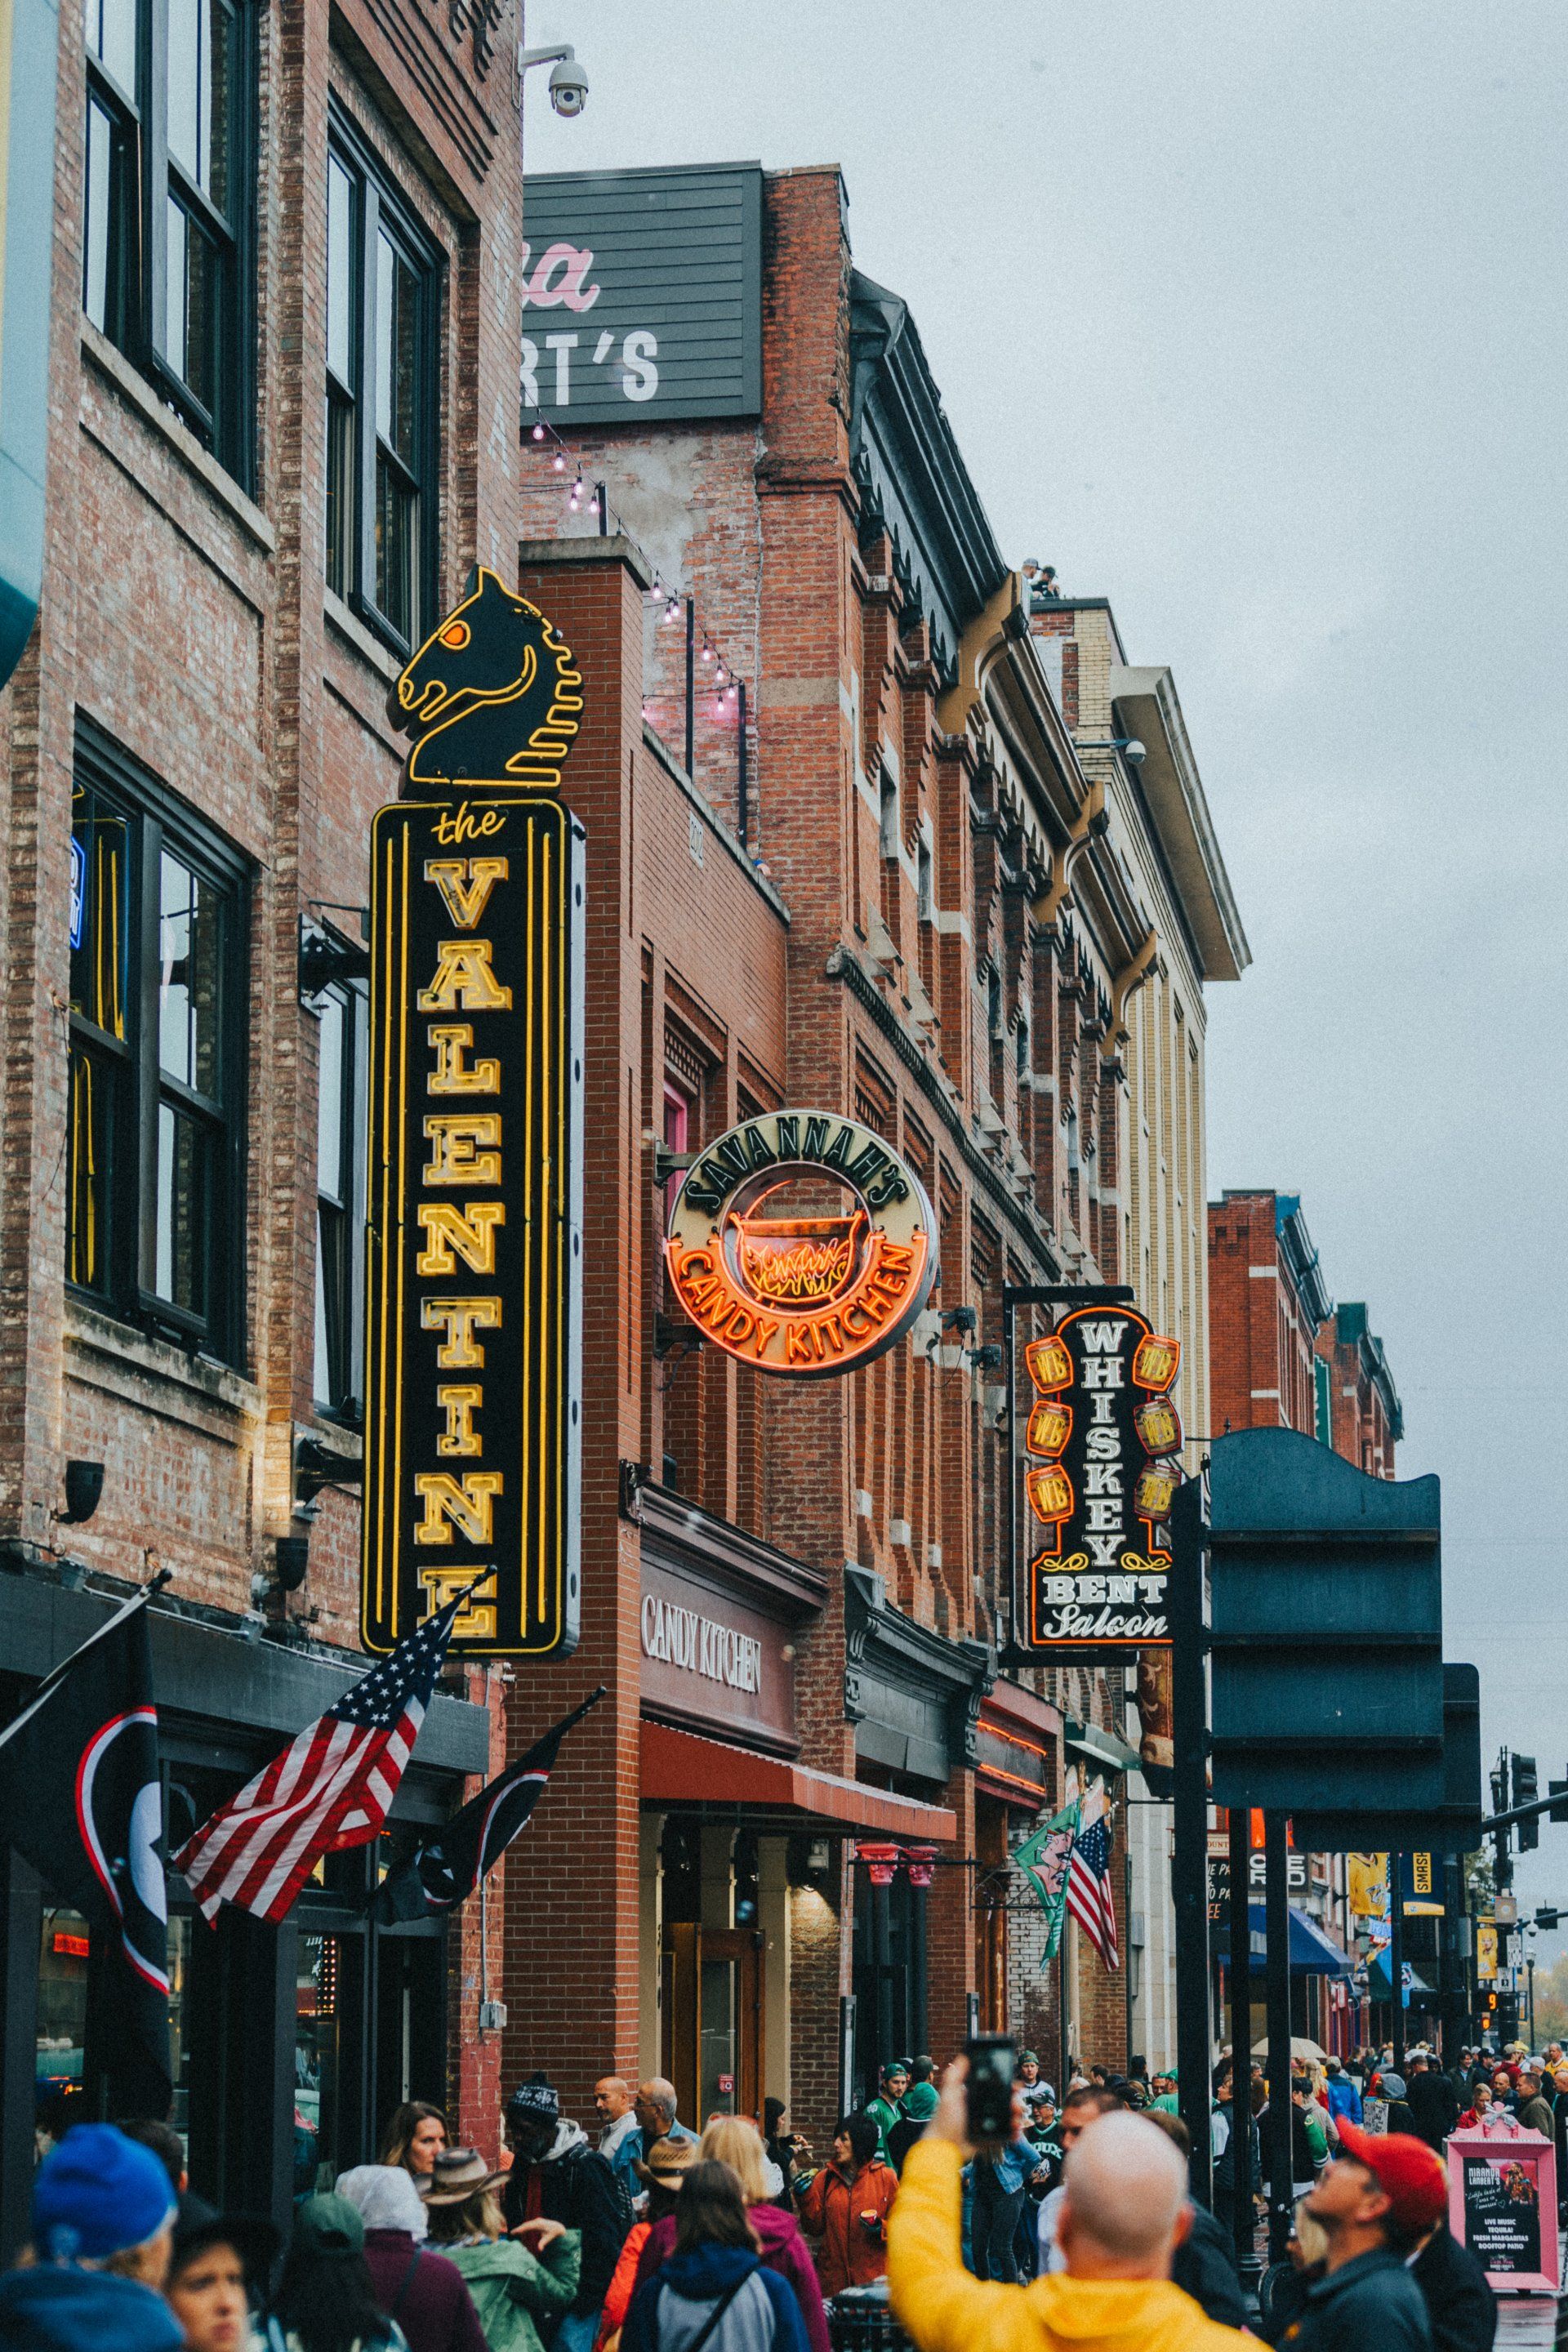 Nashville's Historic District